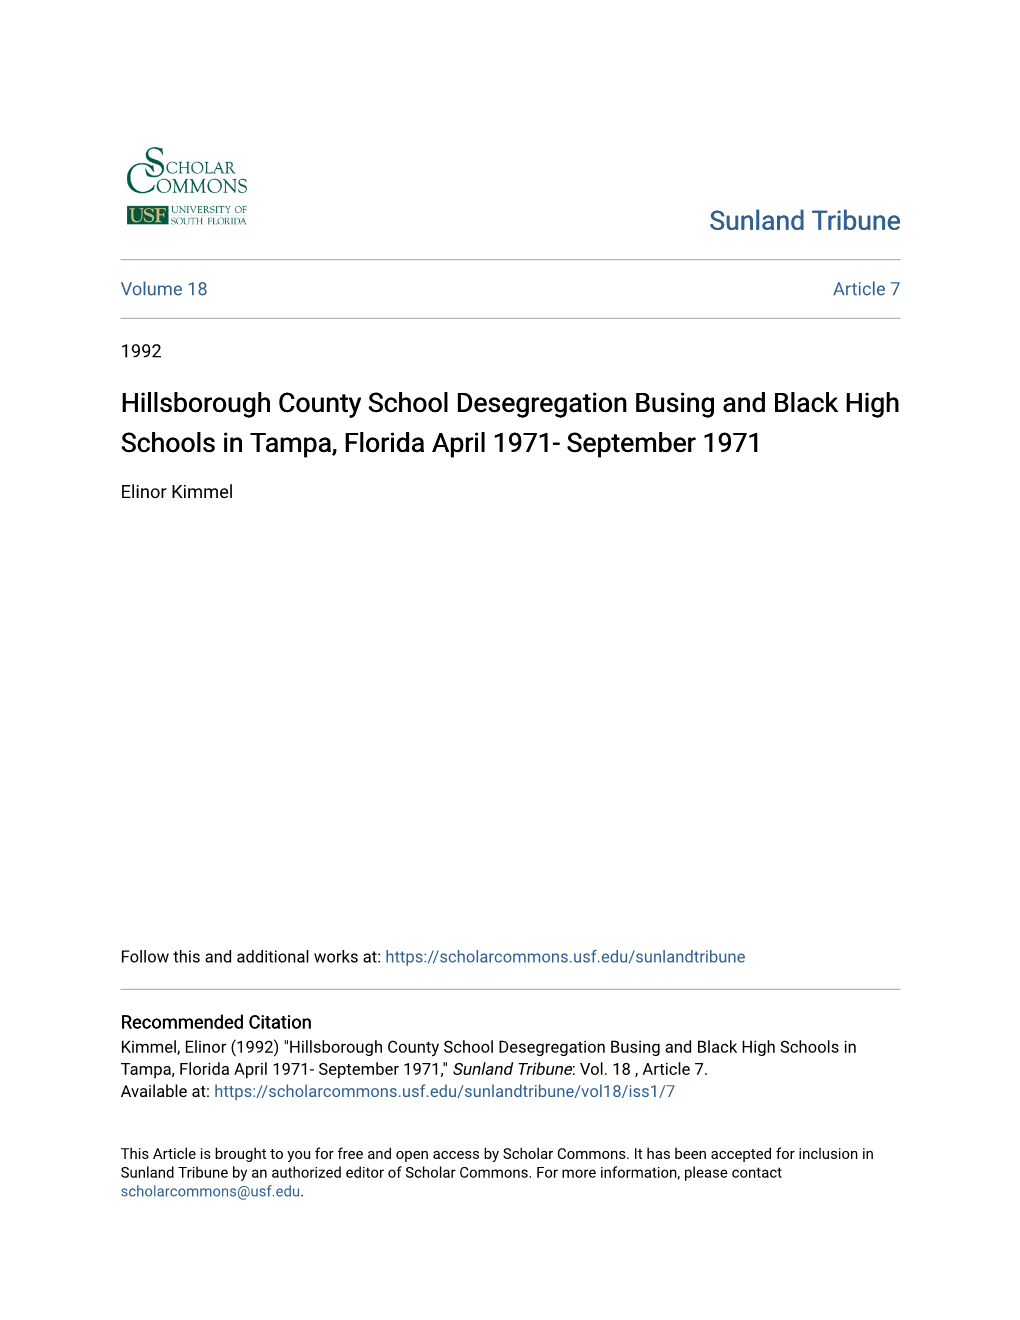 Hillsborough County School Desegregation Busing and Black High Schools in Tampa, Florida April 1971- September 1971